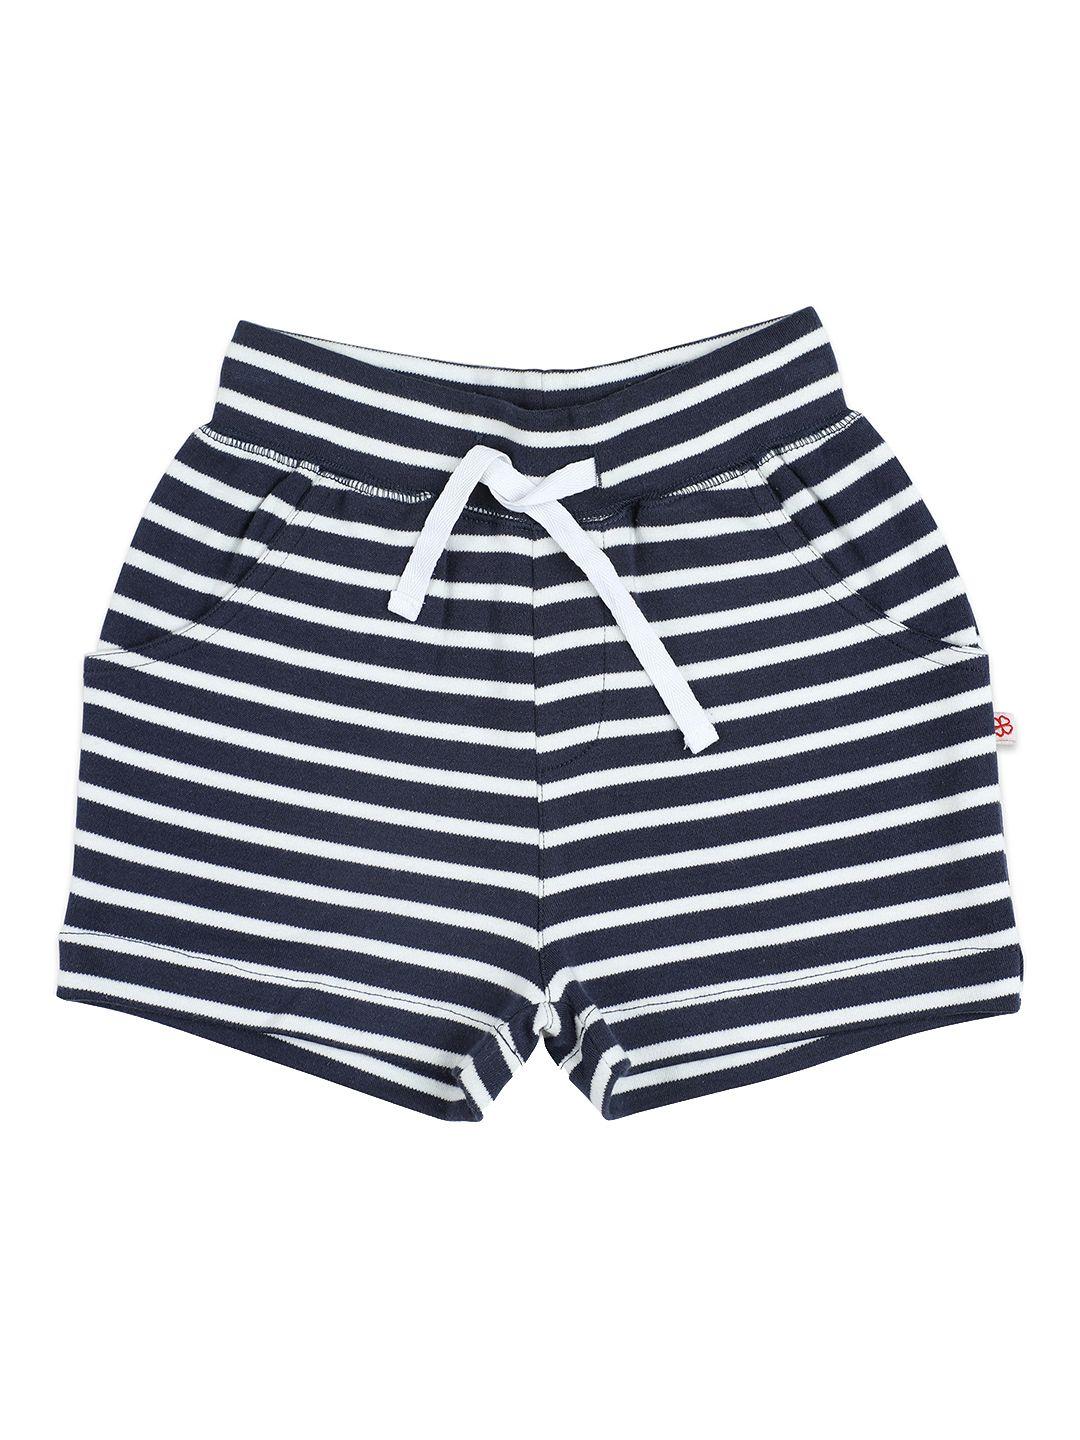 greendigo-boys-navy-blue-striped-striped-shorts